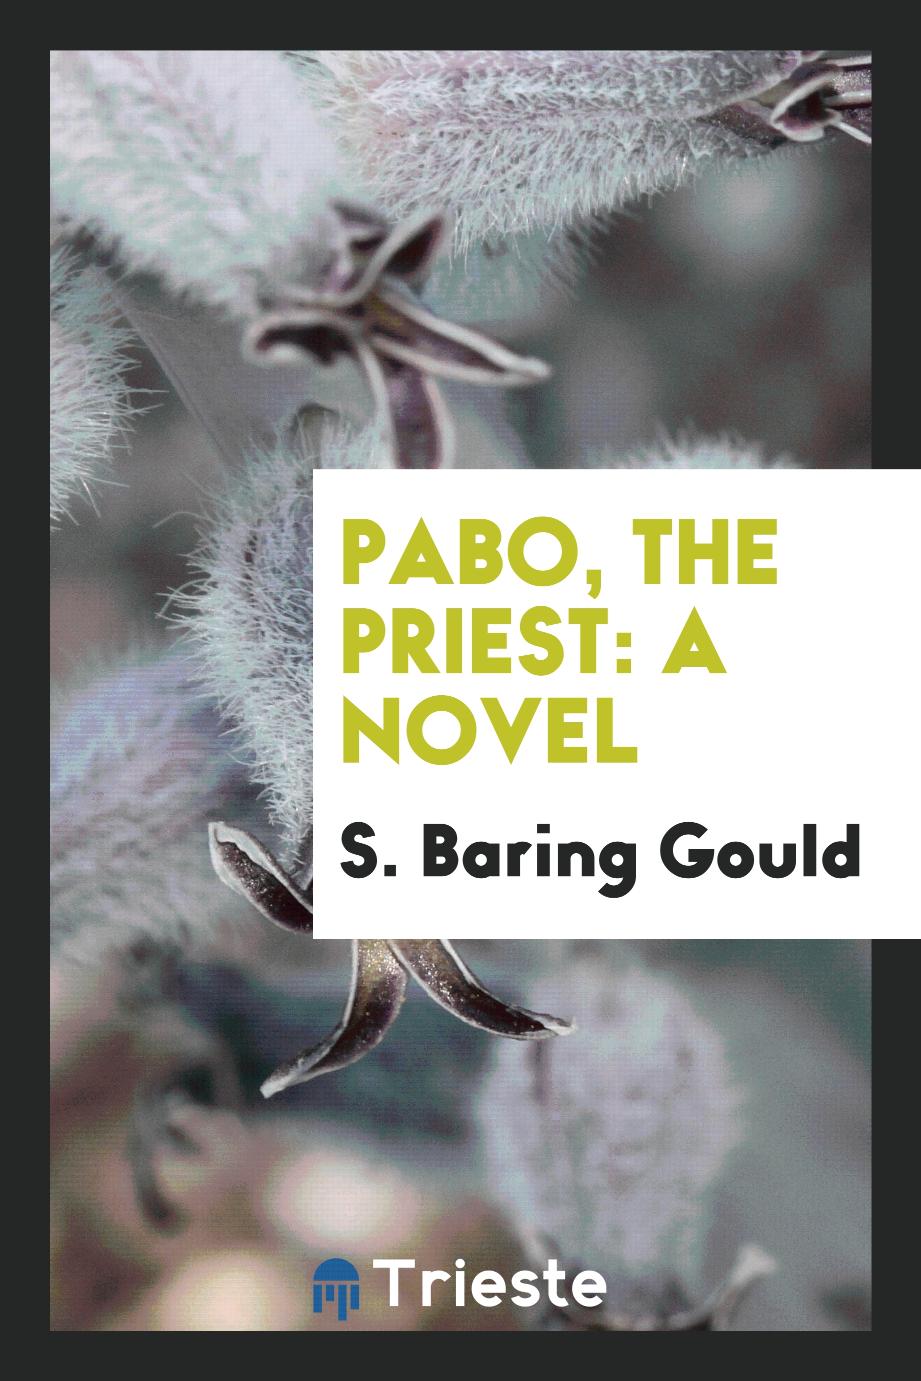 Pabo, the priest: a novel